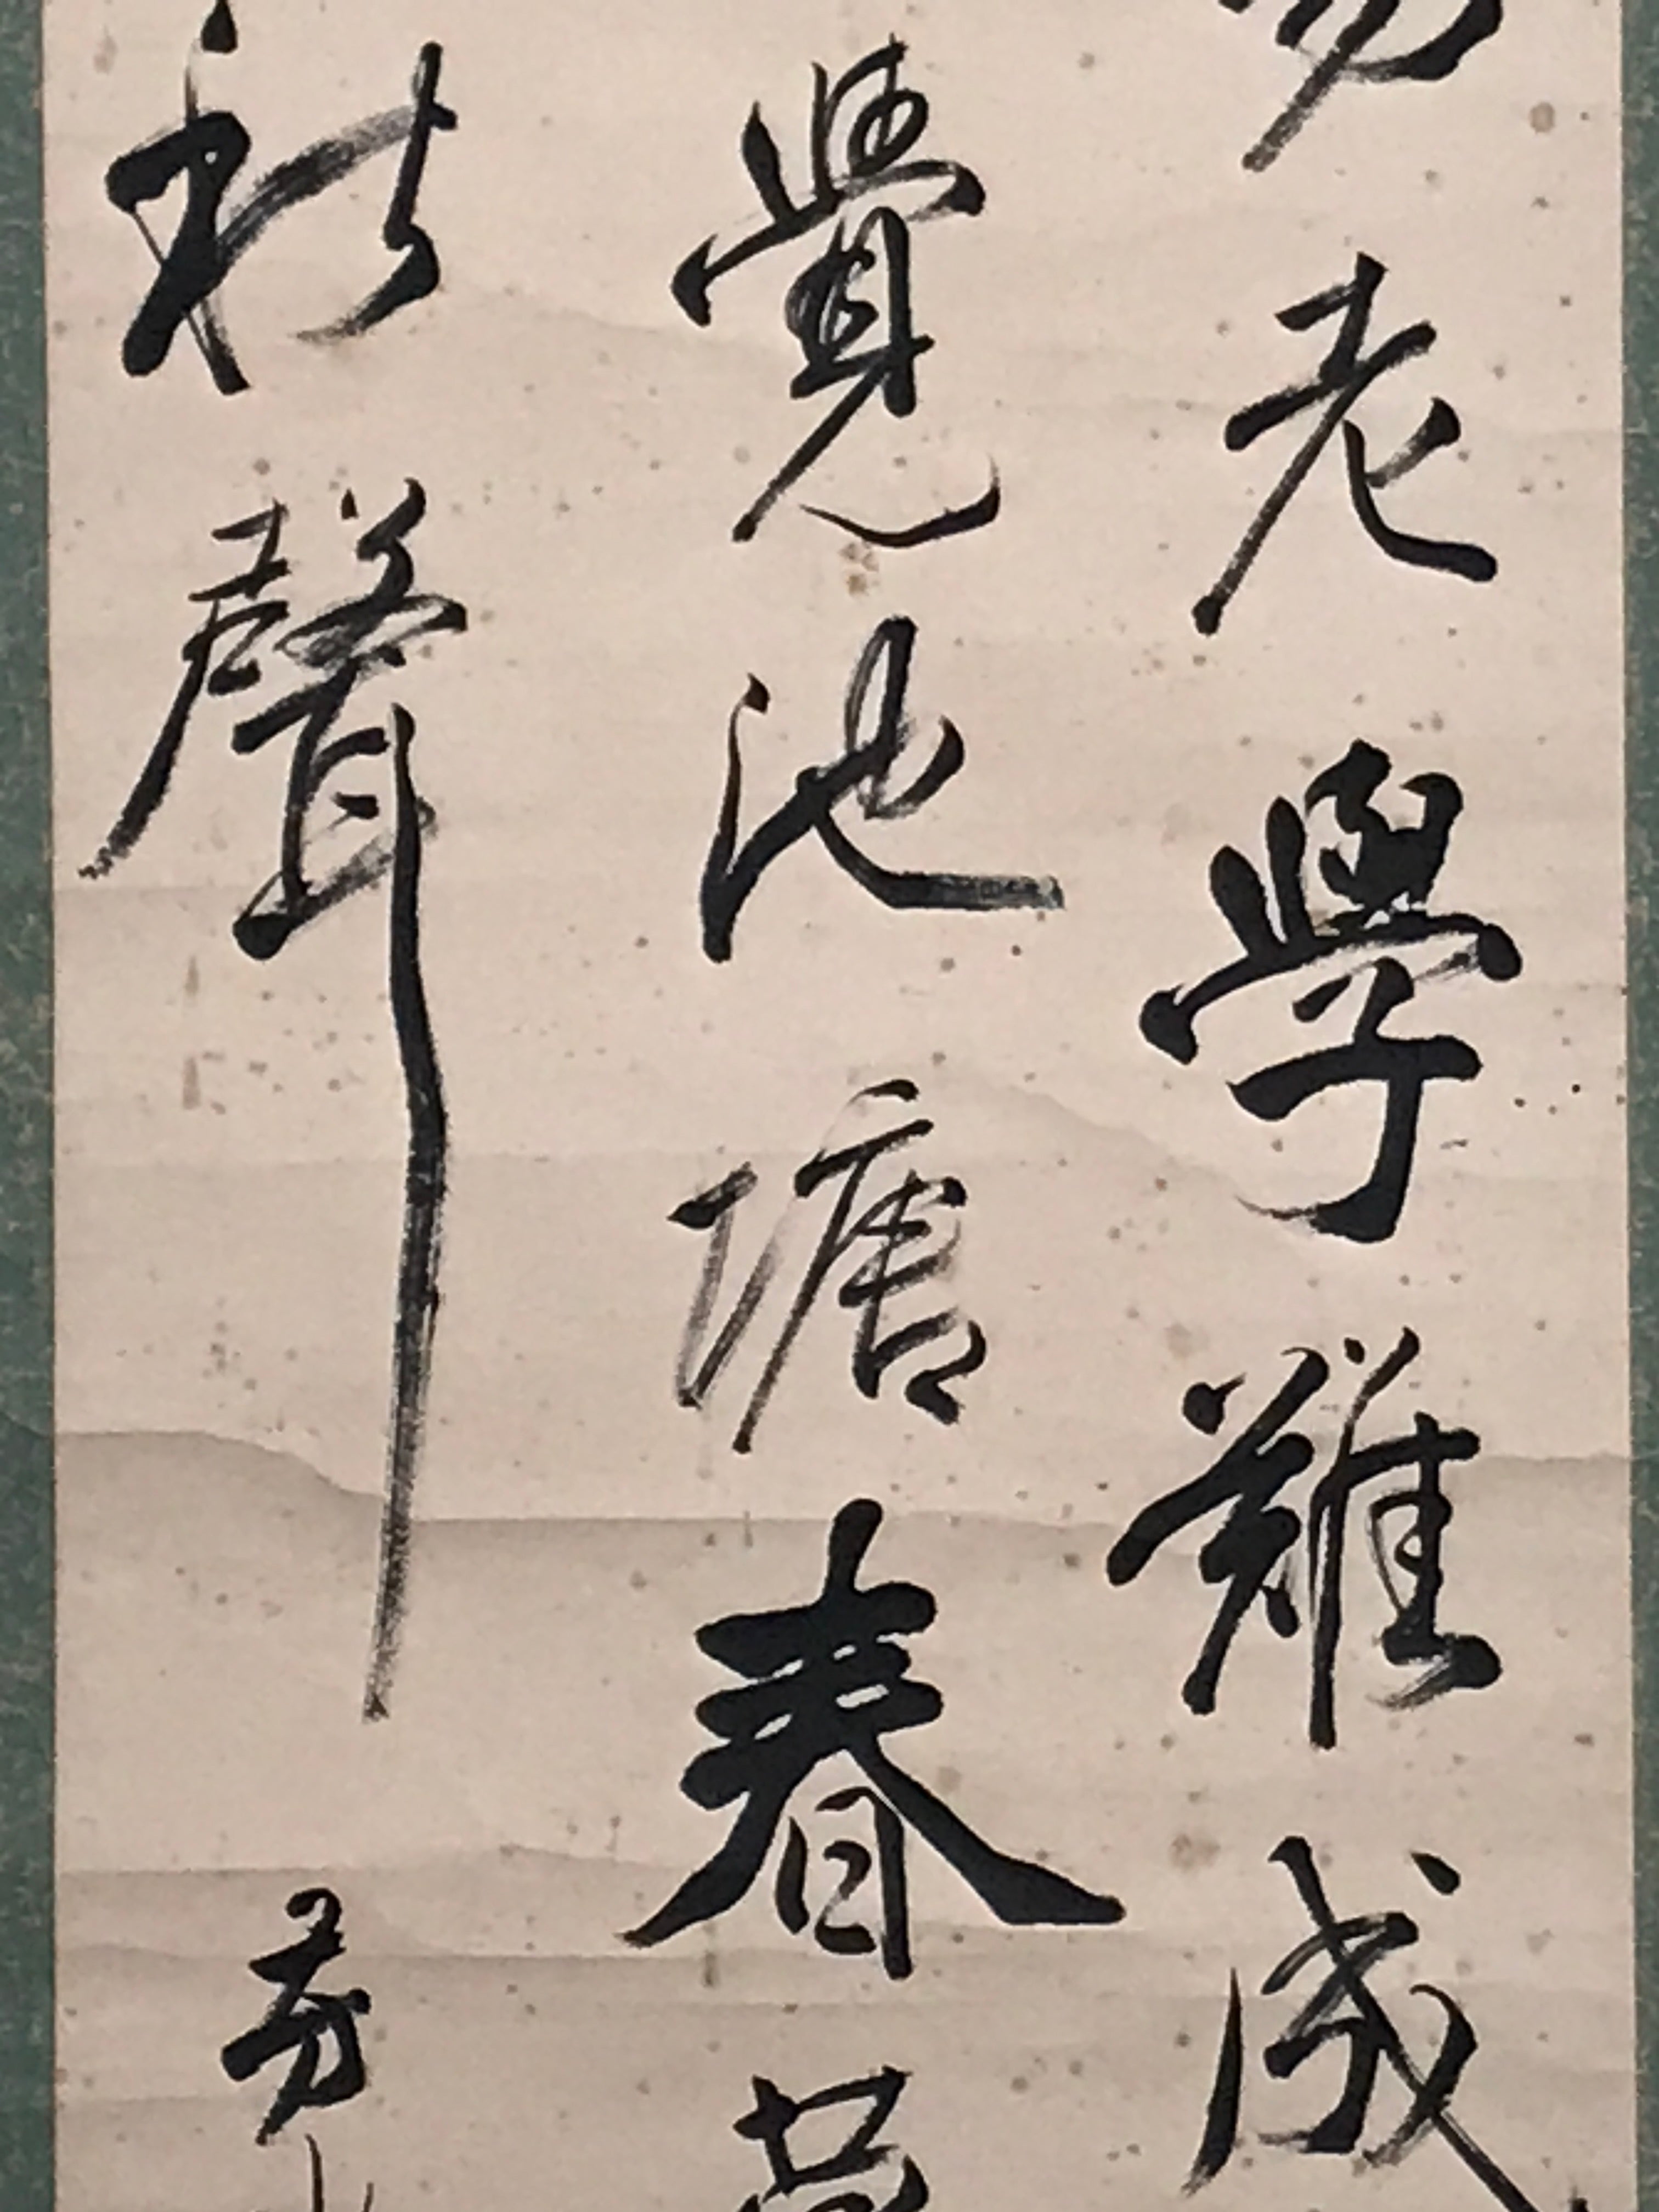 Japanese Hanging Scroll Vtg Chinese Poem Zhu Xi Kanshi Calligraphy Kakejiku SC89